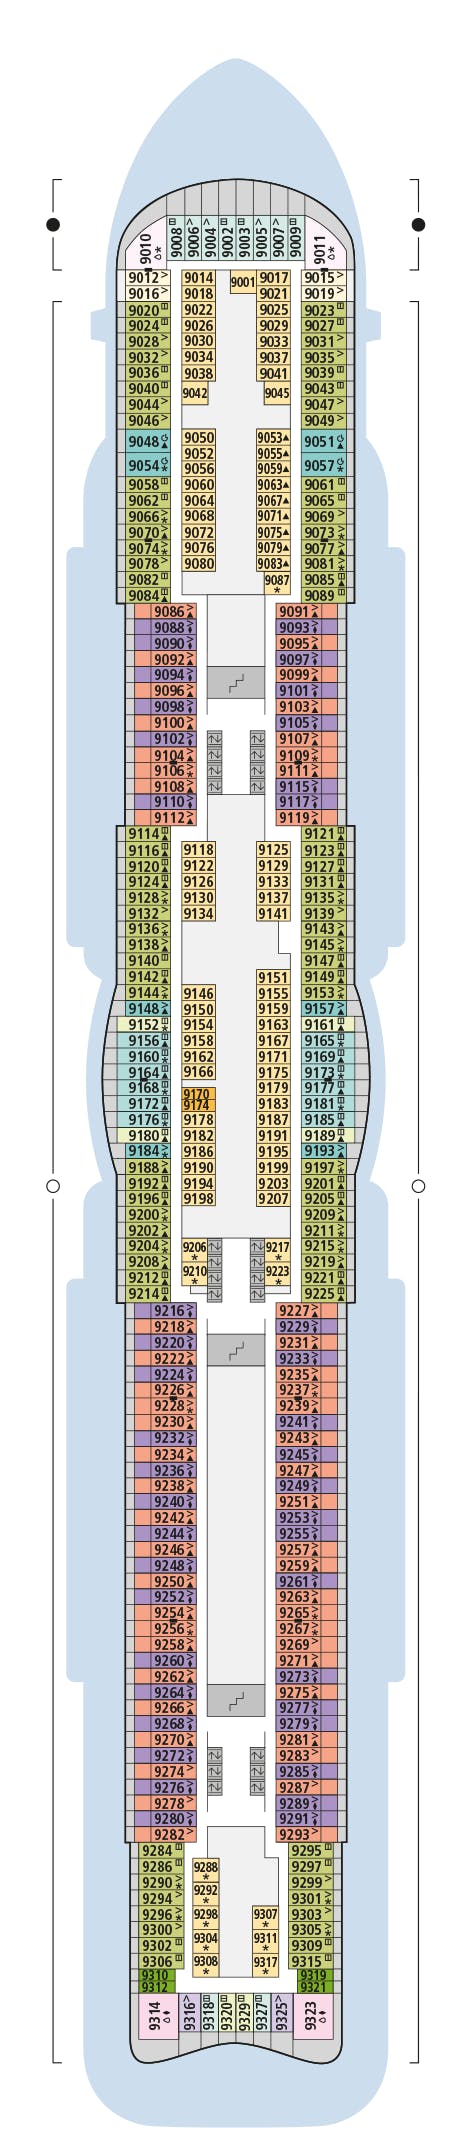 AIDAnova - AIDA Cruises - Deck 9 (Deck 9)